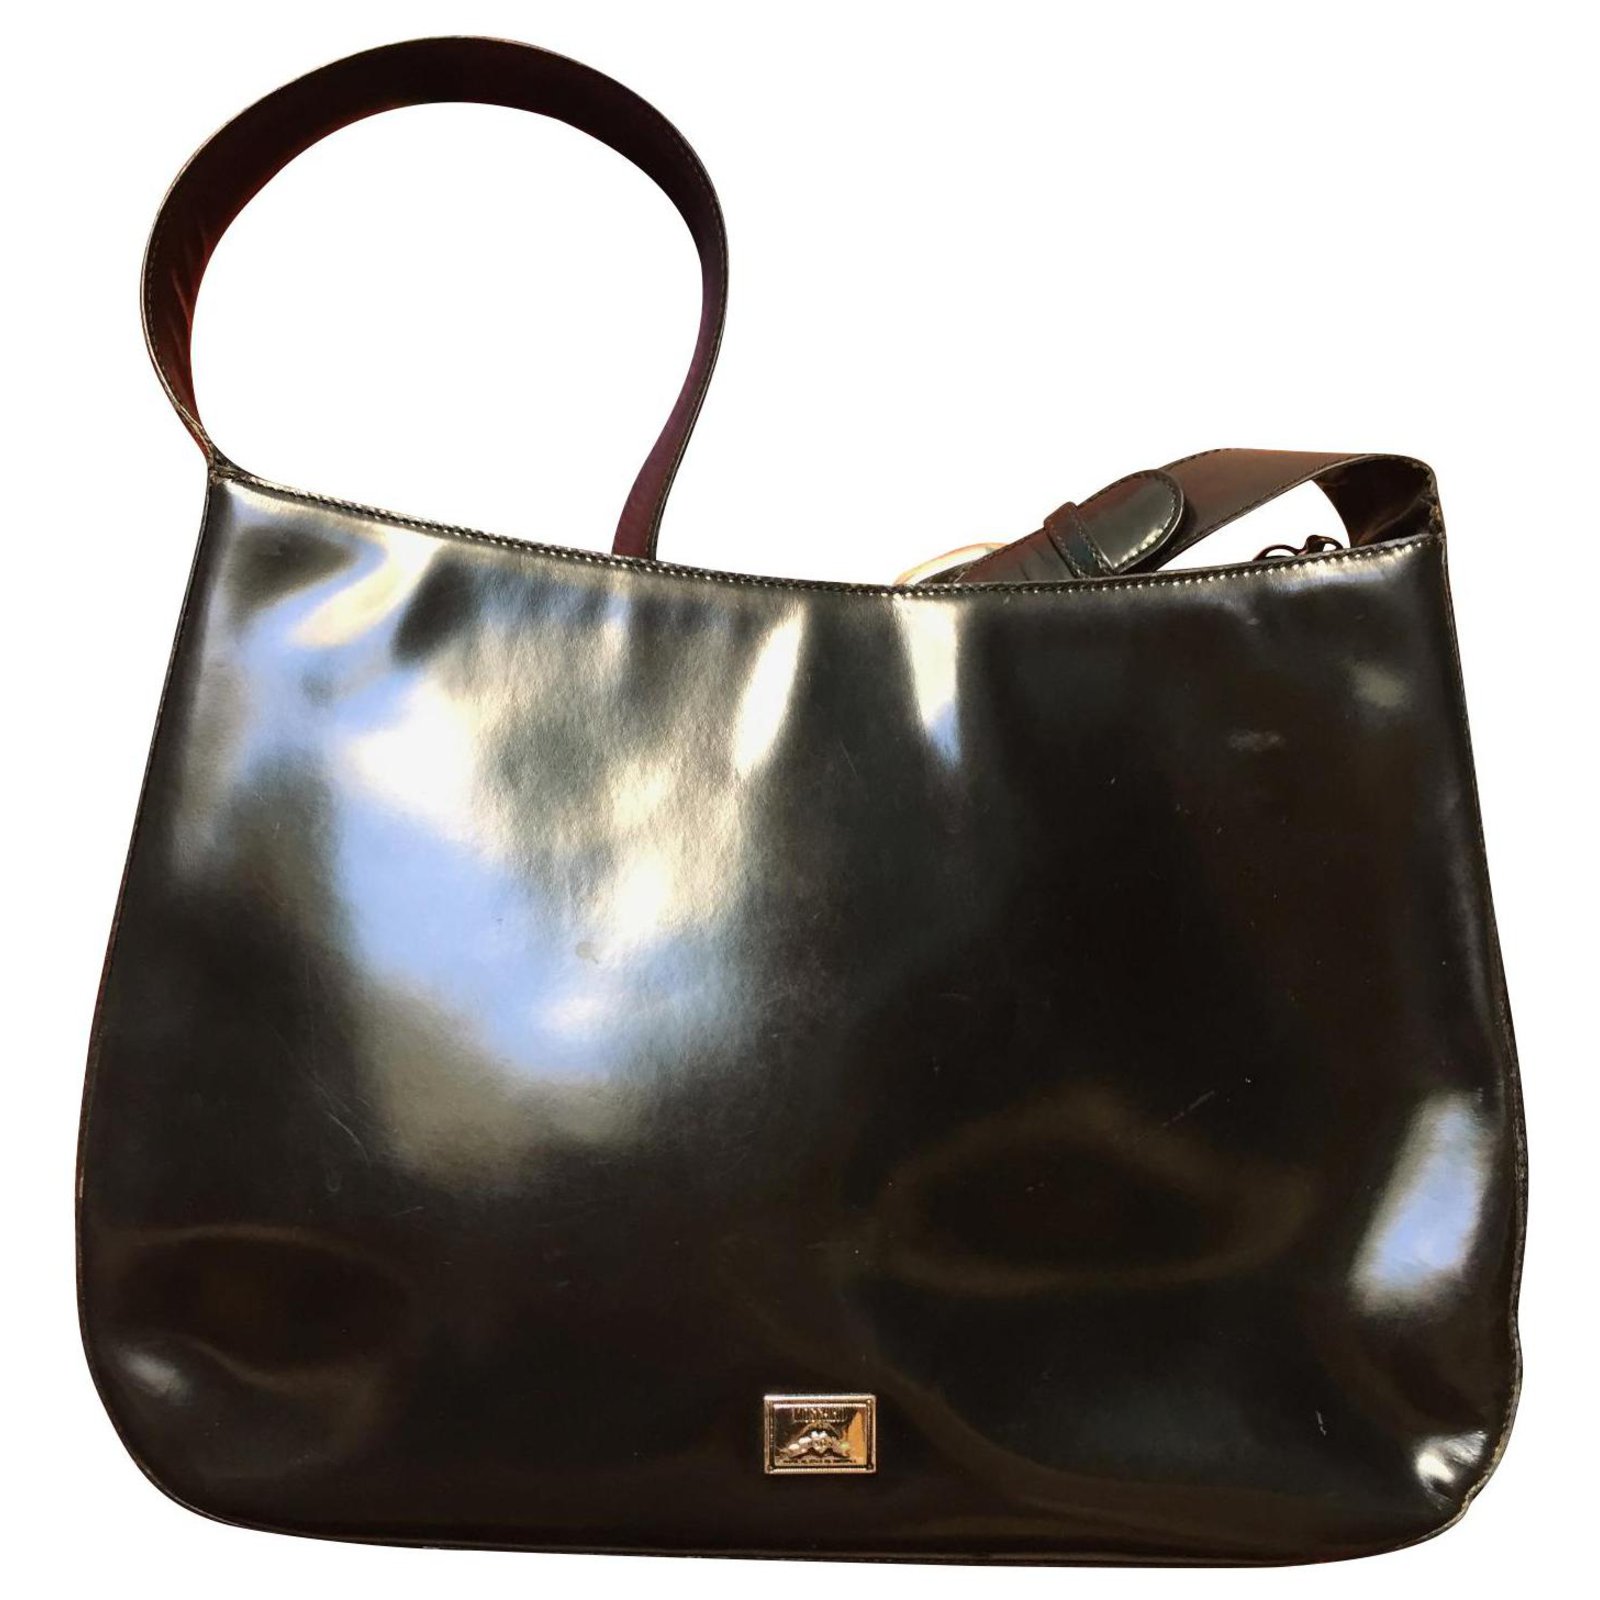 moschino black leather shoulder bag